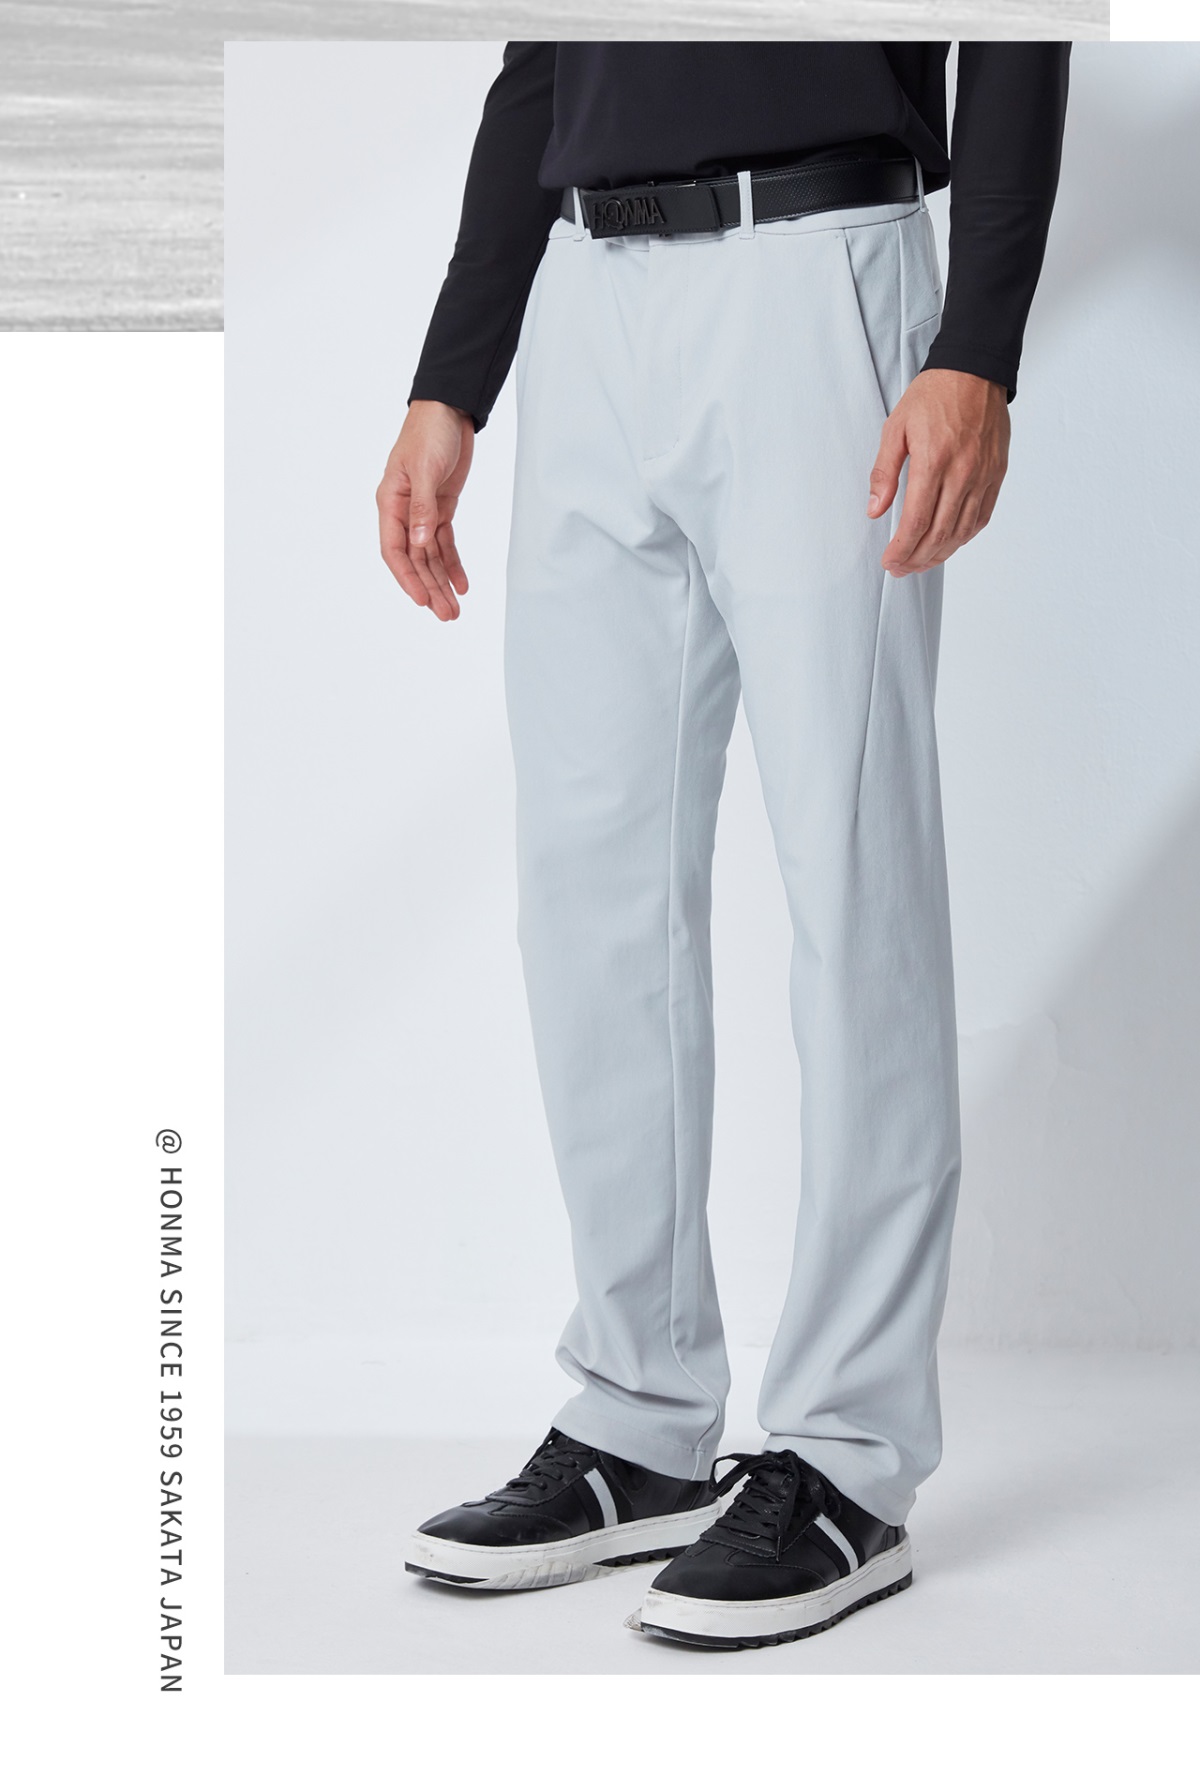 HONMA新款高尔夫男子长裤日本进口面料弹力舒适轻盈透气秋黑灰